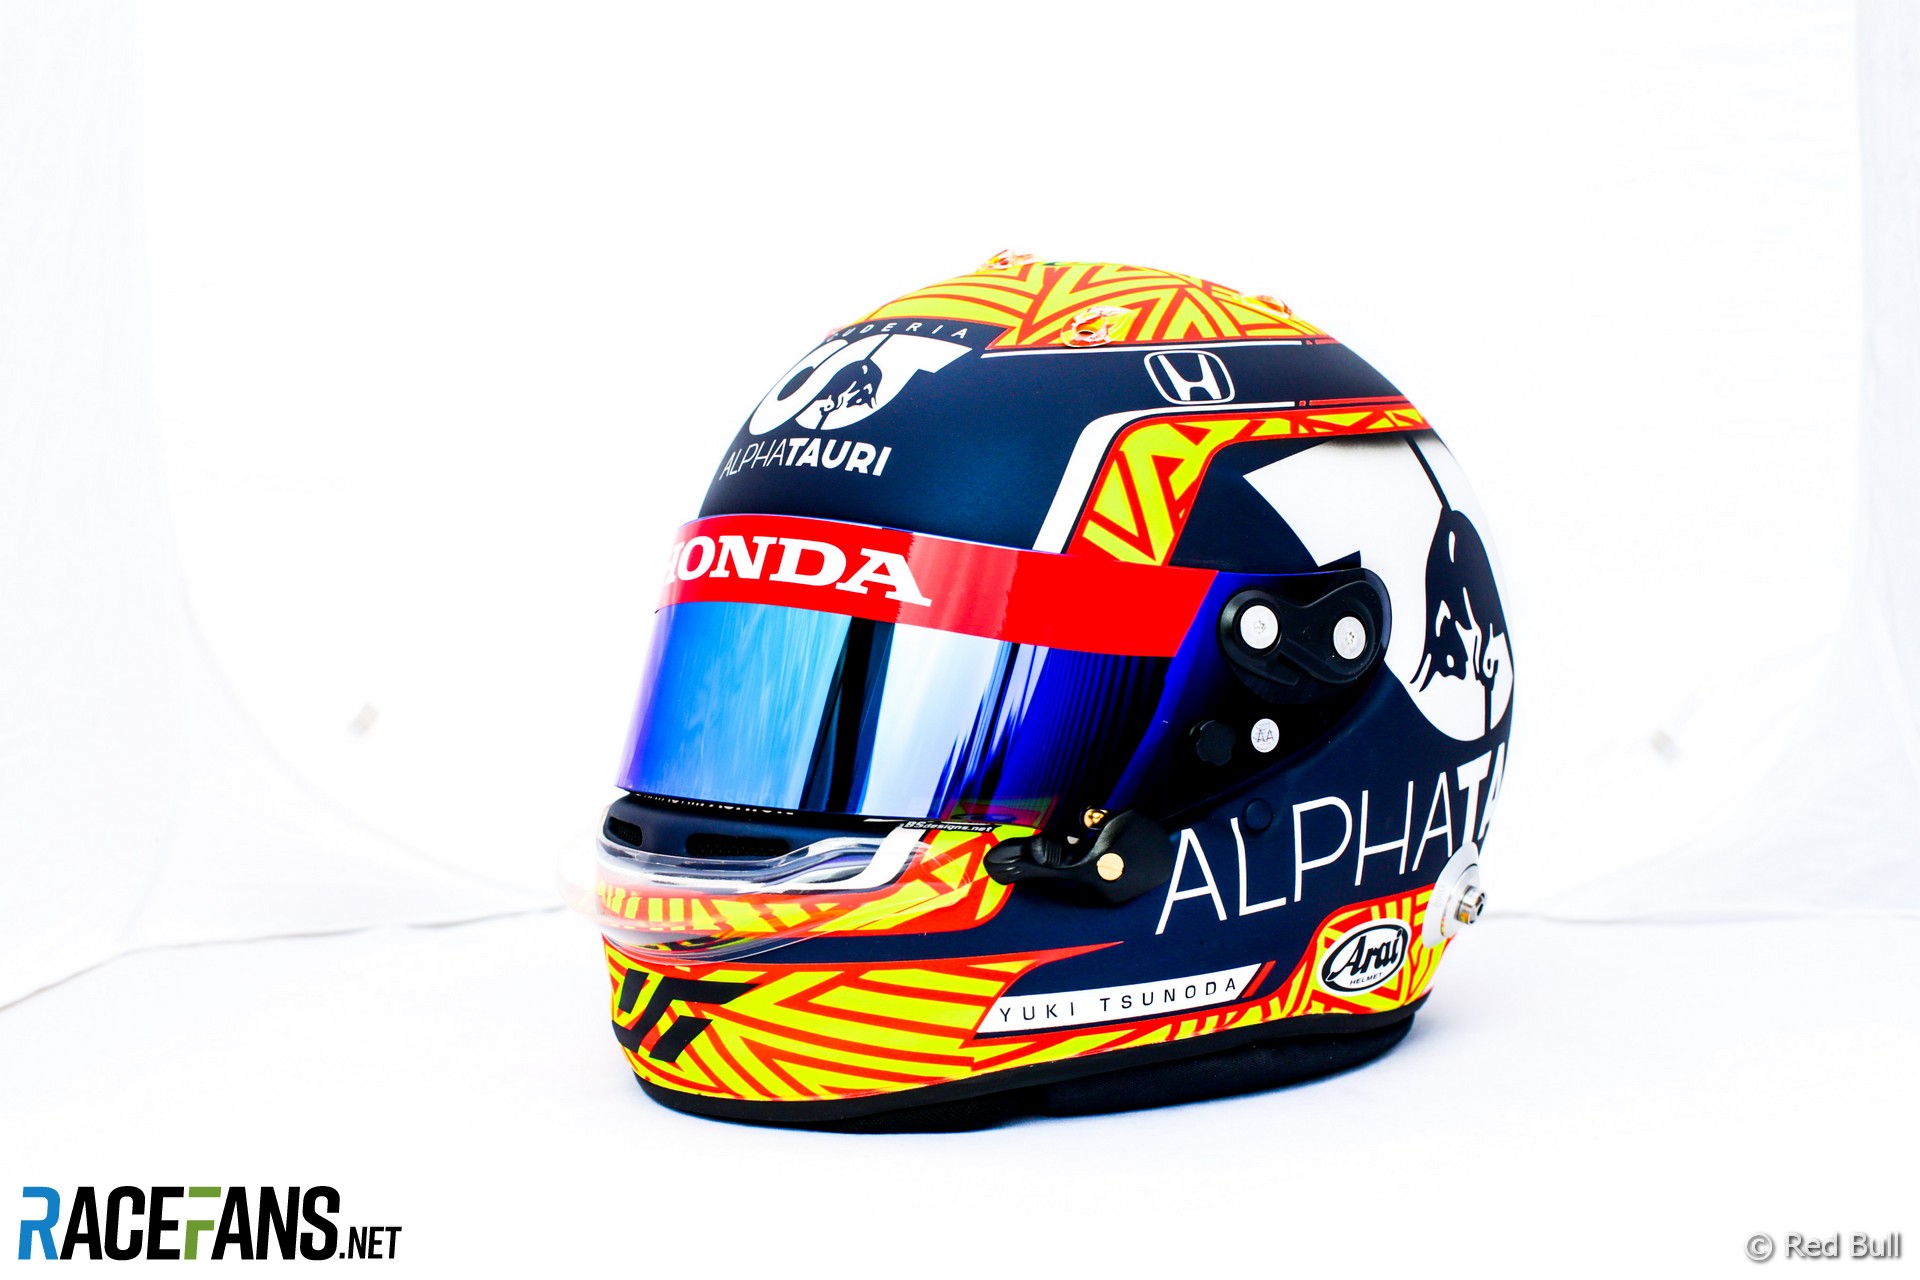 Yuki Tsunoda's 2021 Belgian Grand Prix helmet design